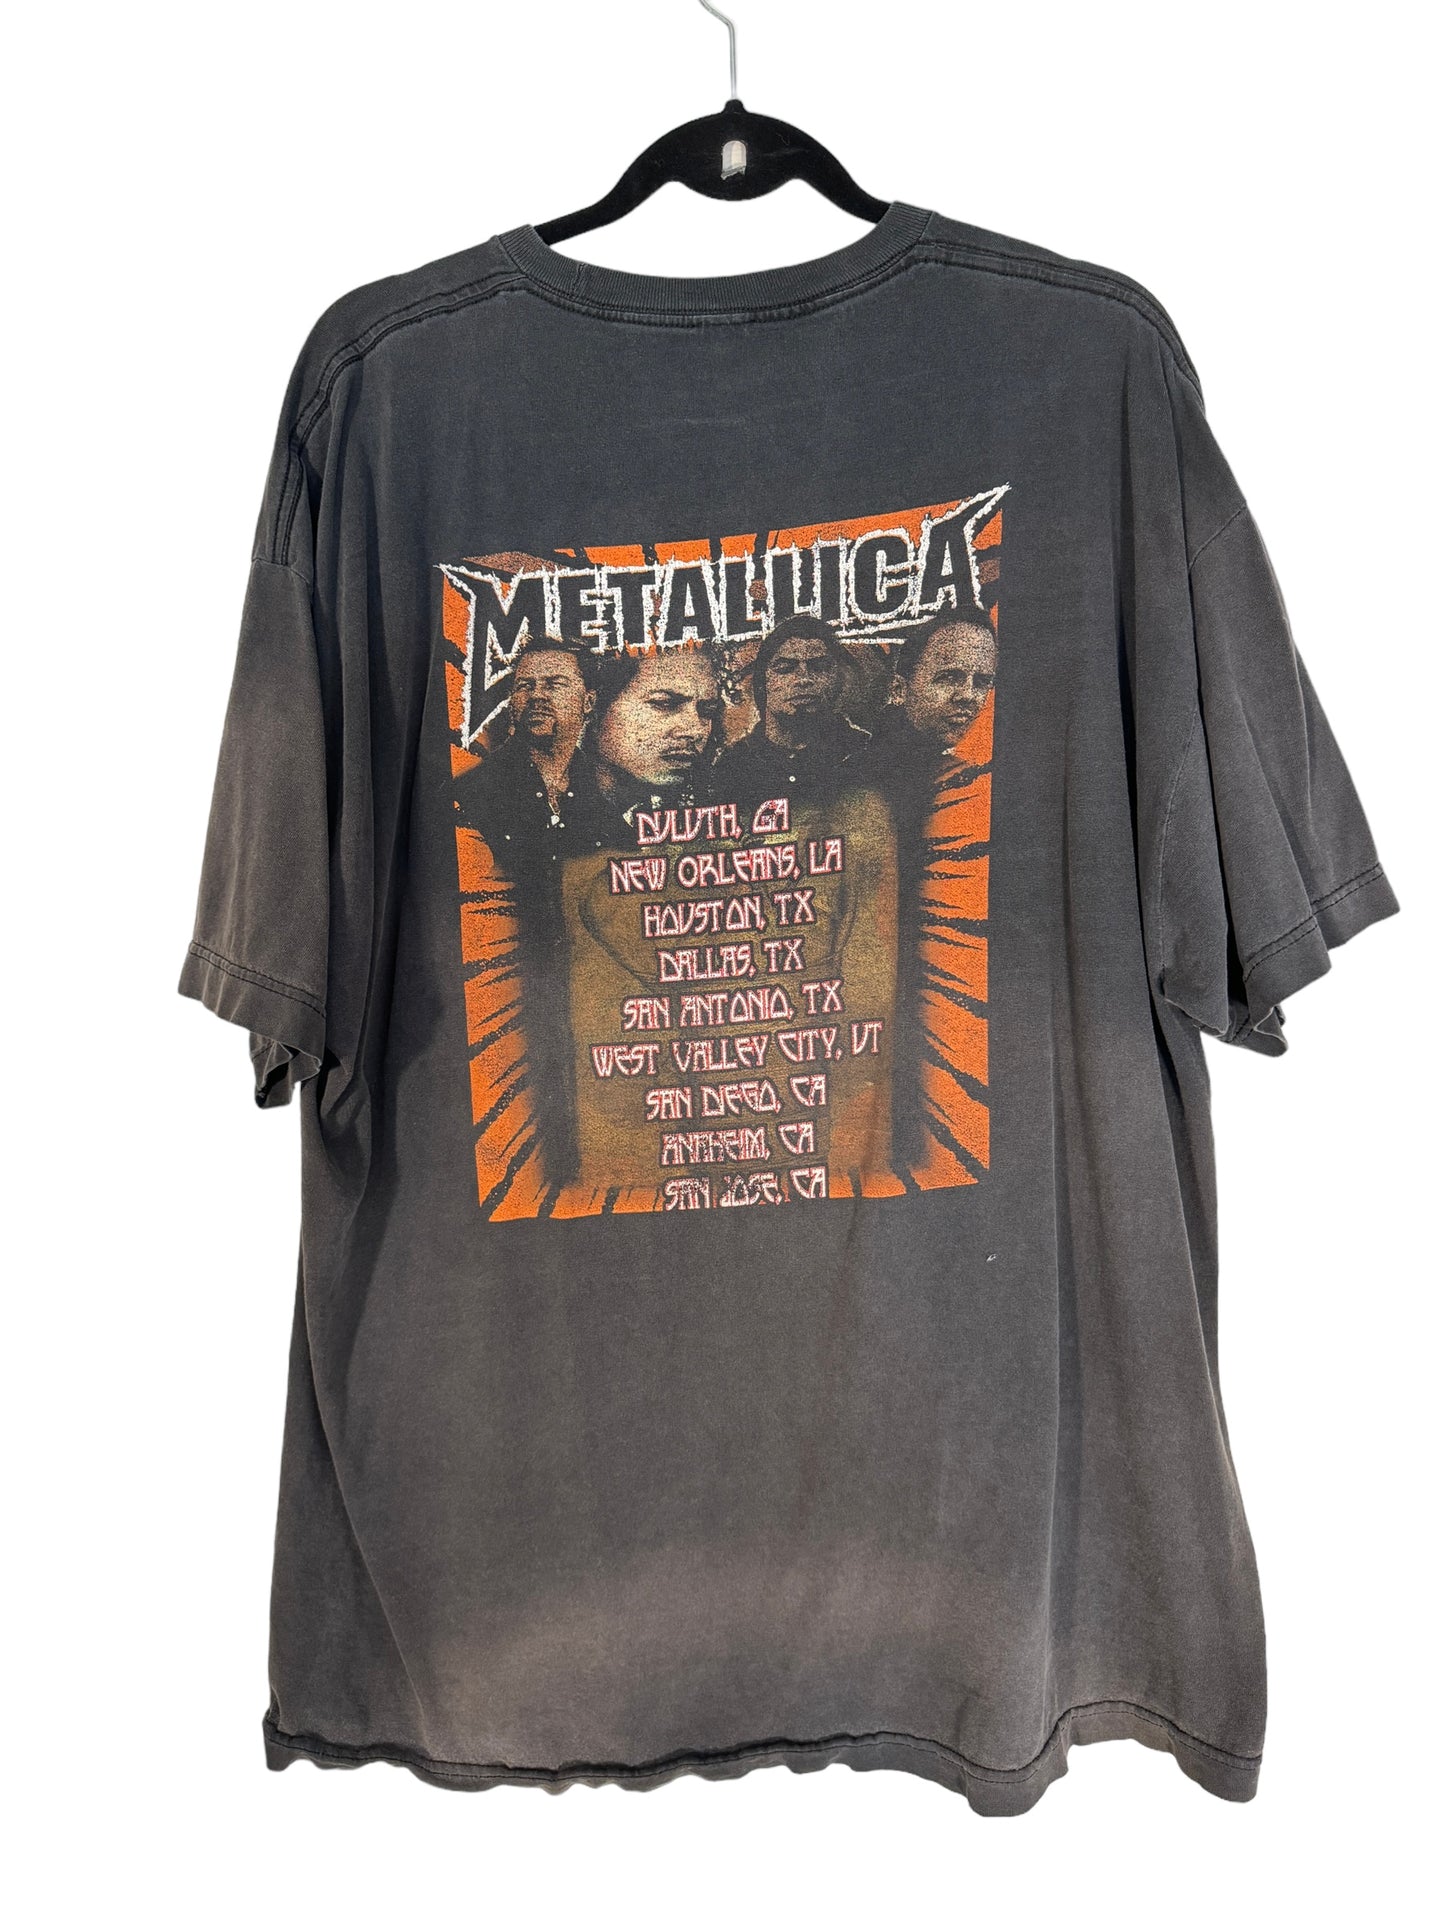 Vintage Metallica Shirt 2004 Metallica Concert Shirt